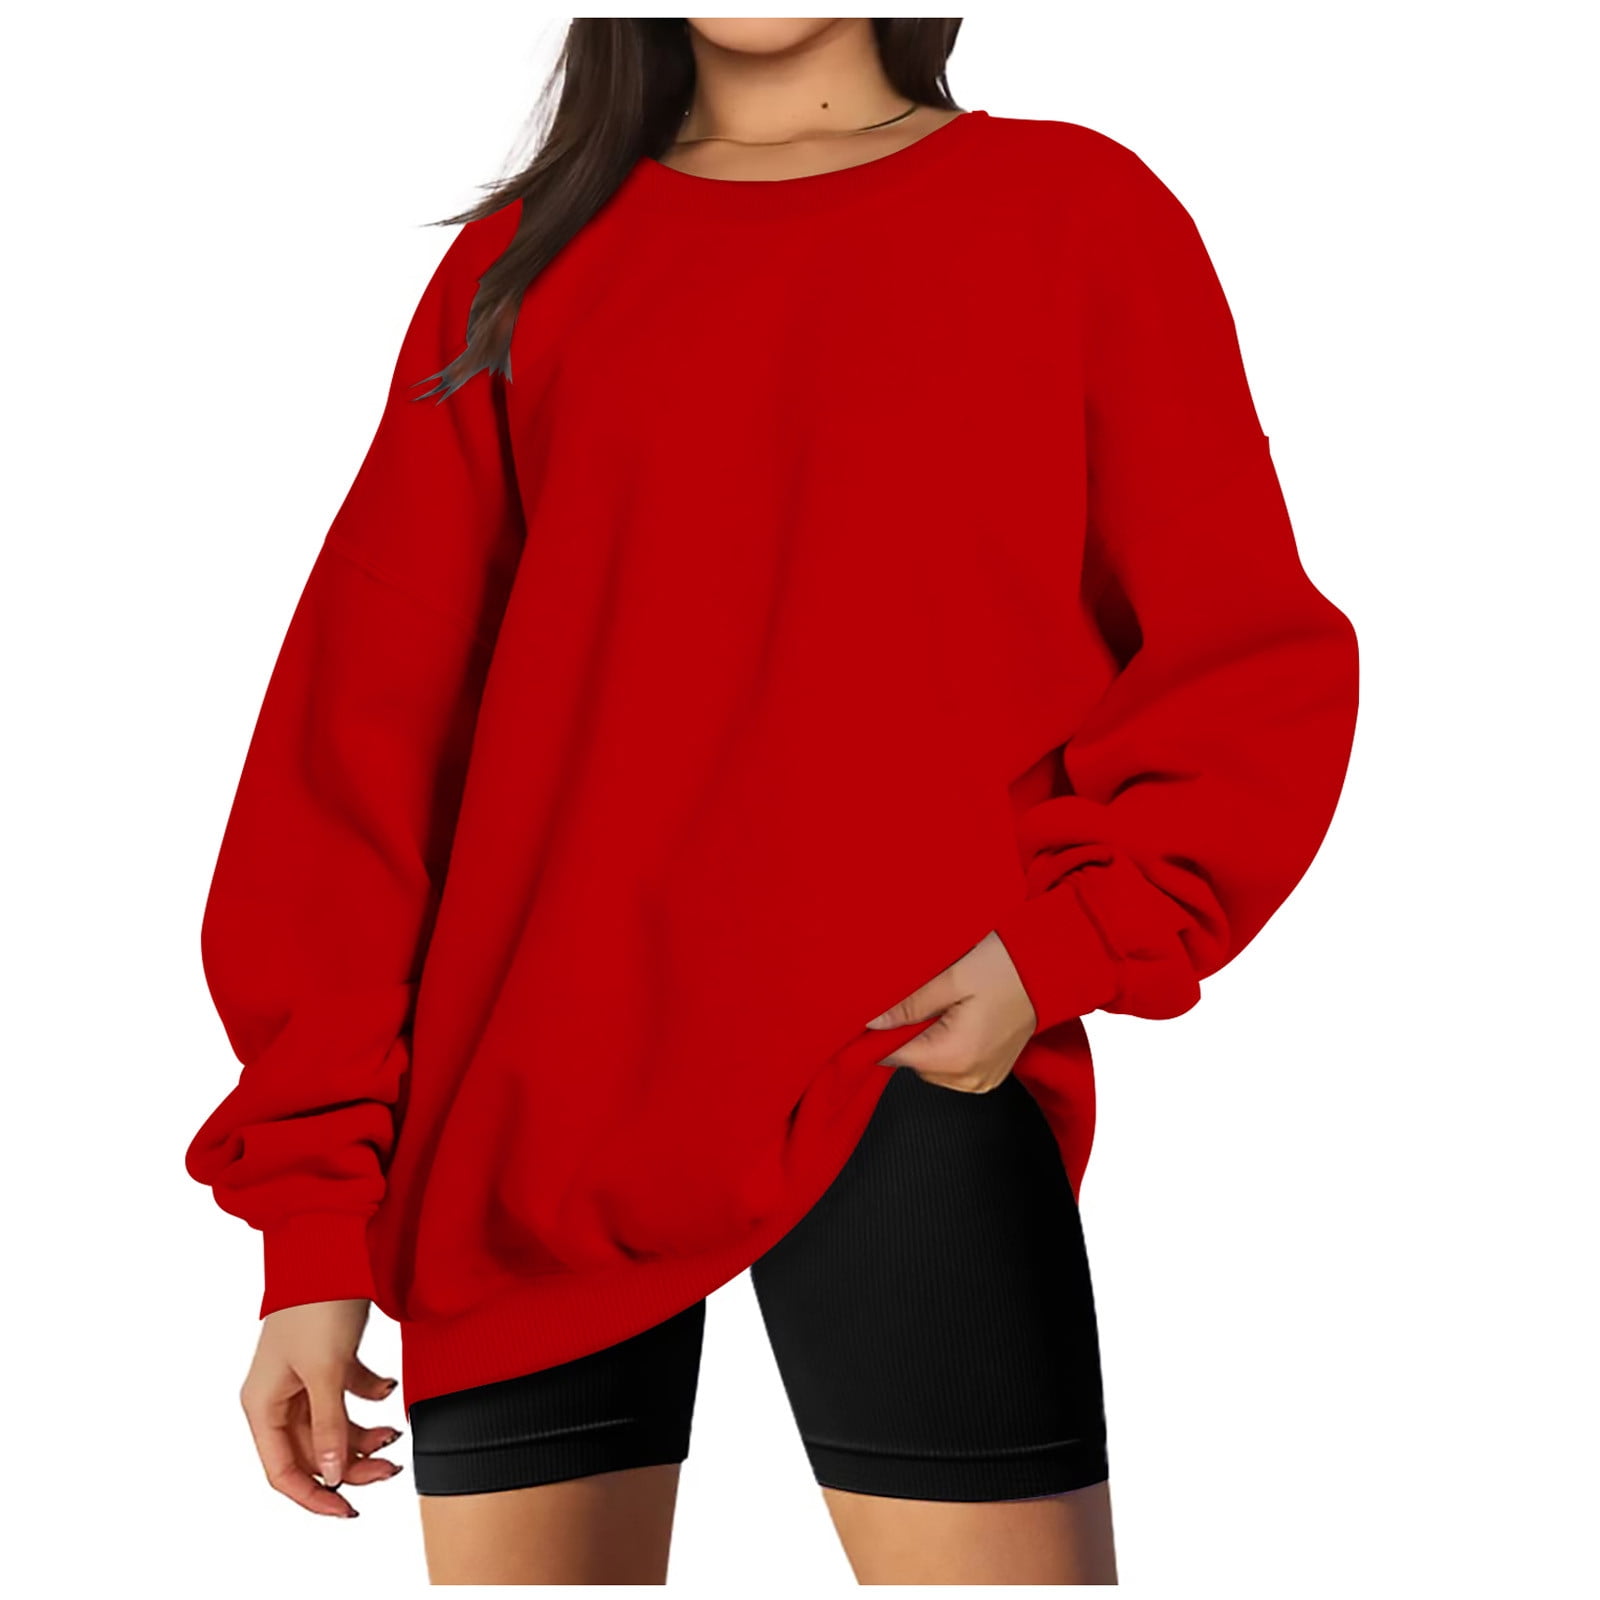 LOVE Cozy Fleece Red Sweatshirt W/Black Letters Print PARIS/front/ LONDON/ back/